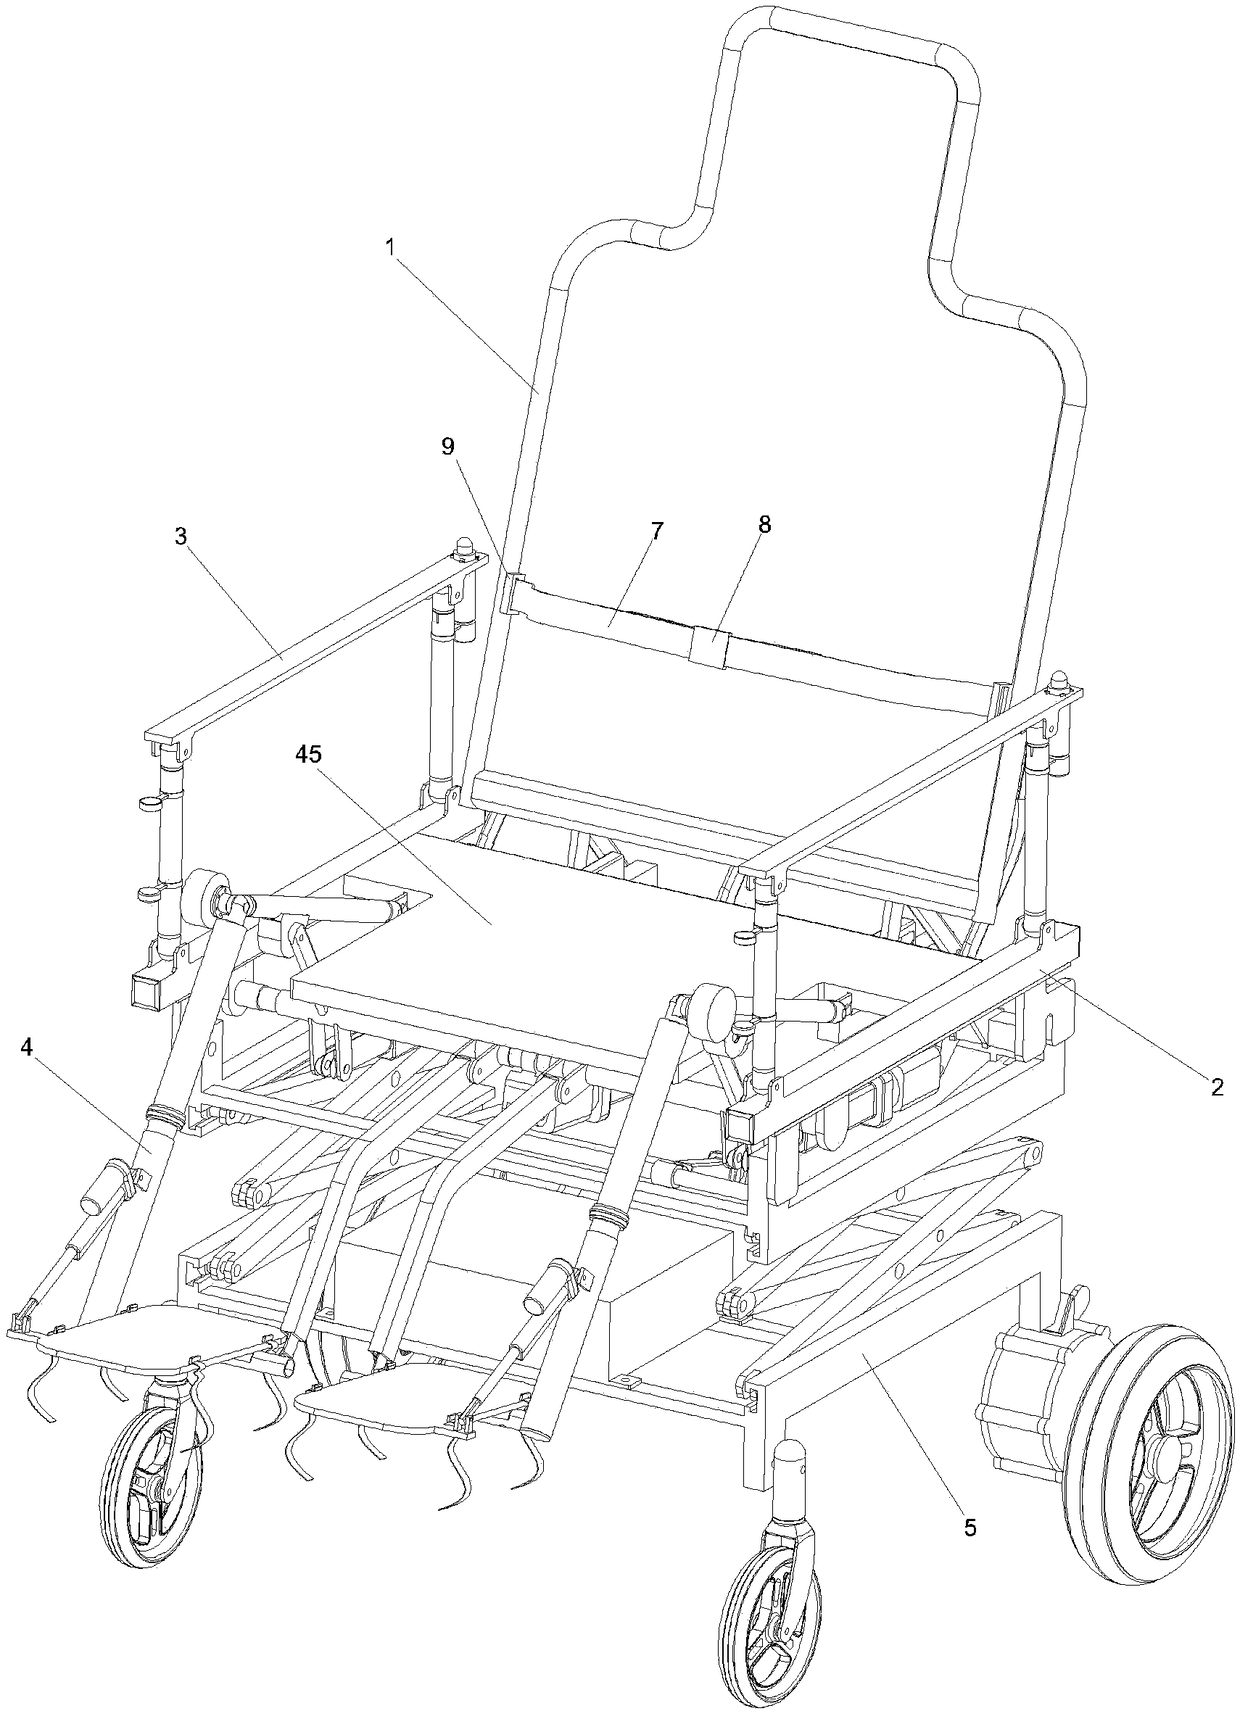 Lower limb rehabilitation equipment loaded on wheelchair